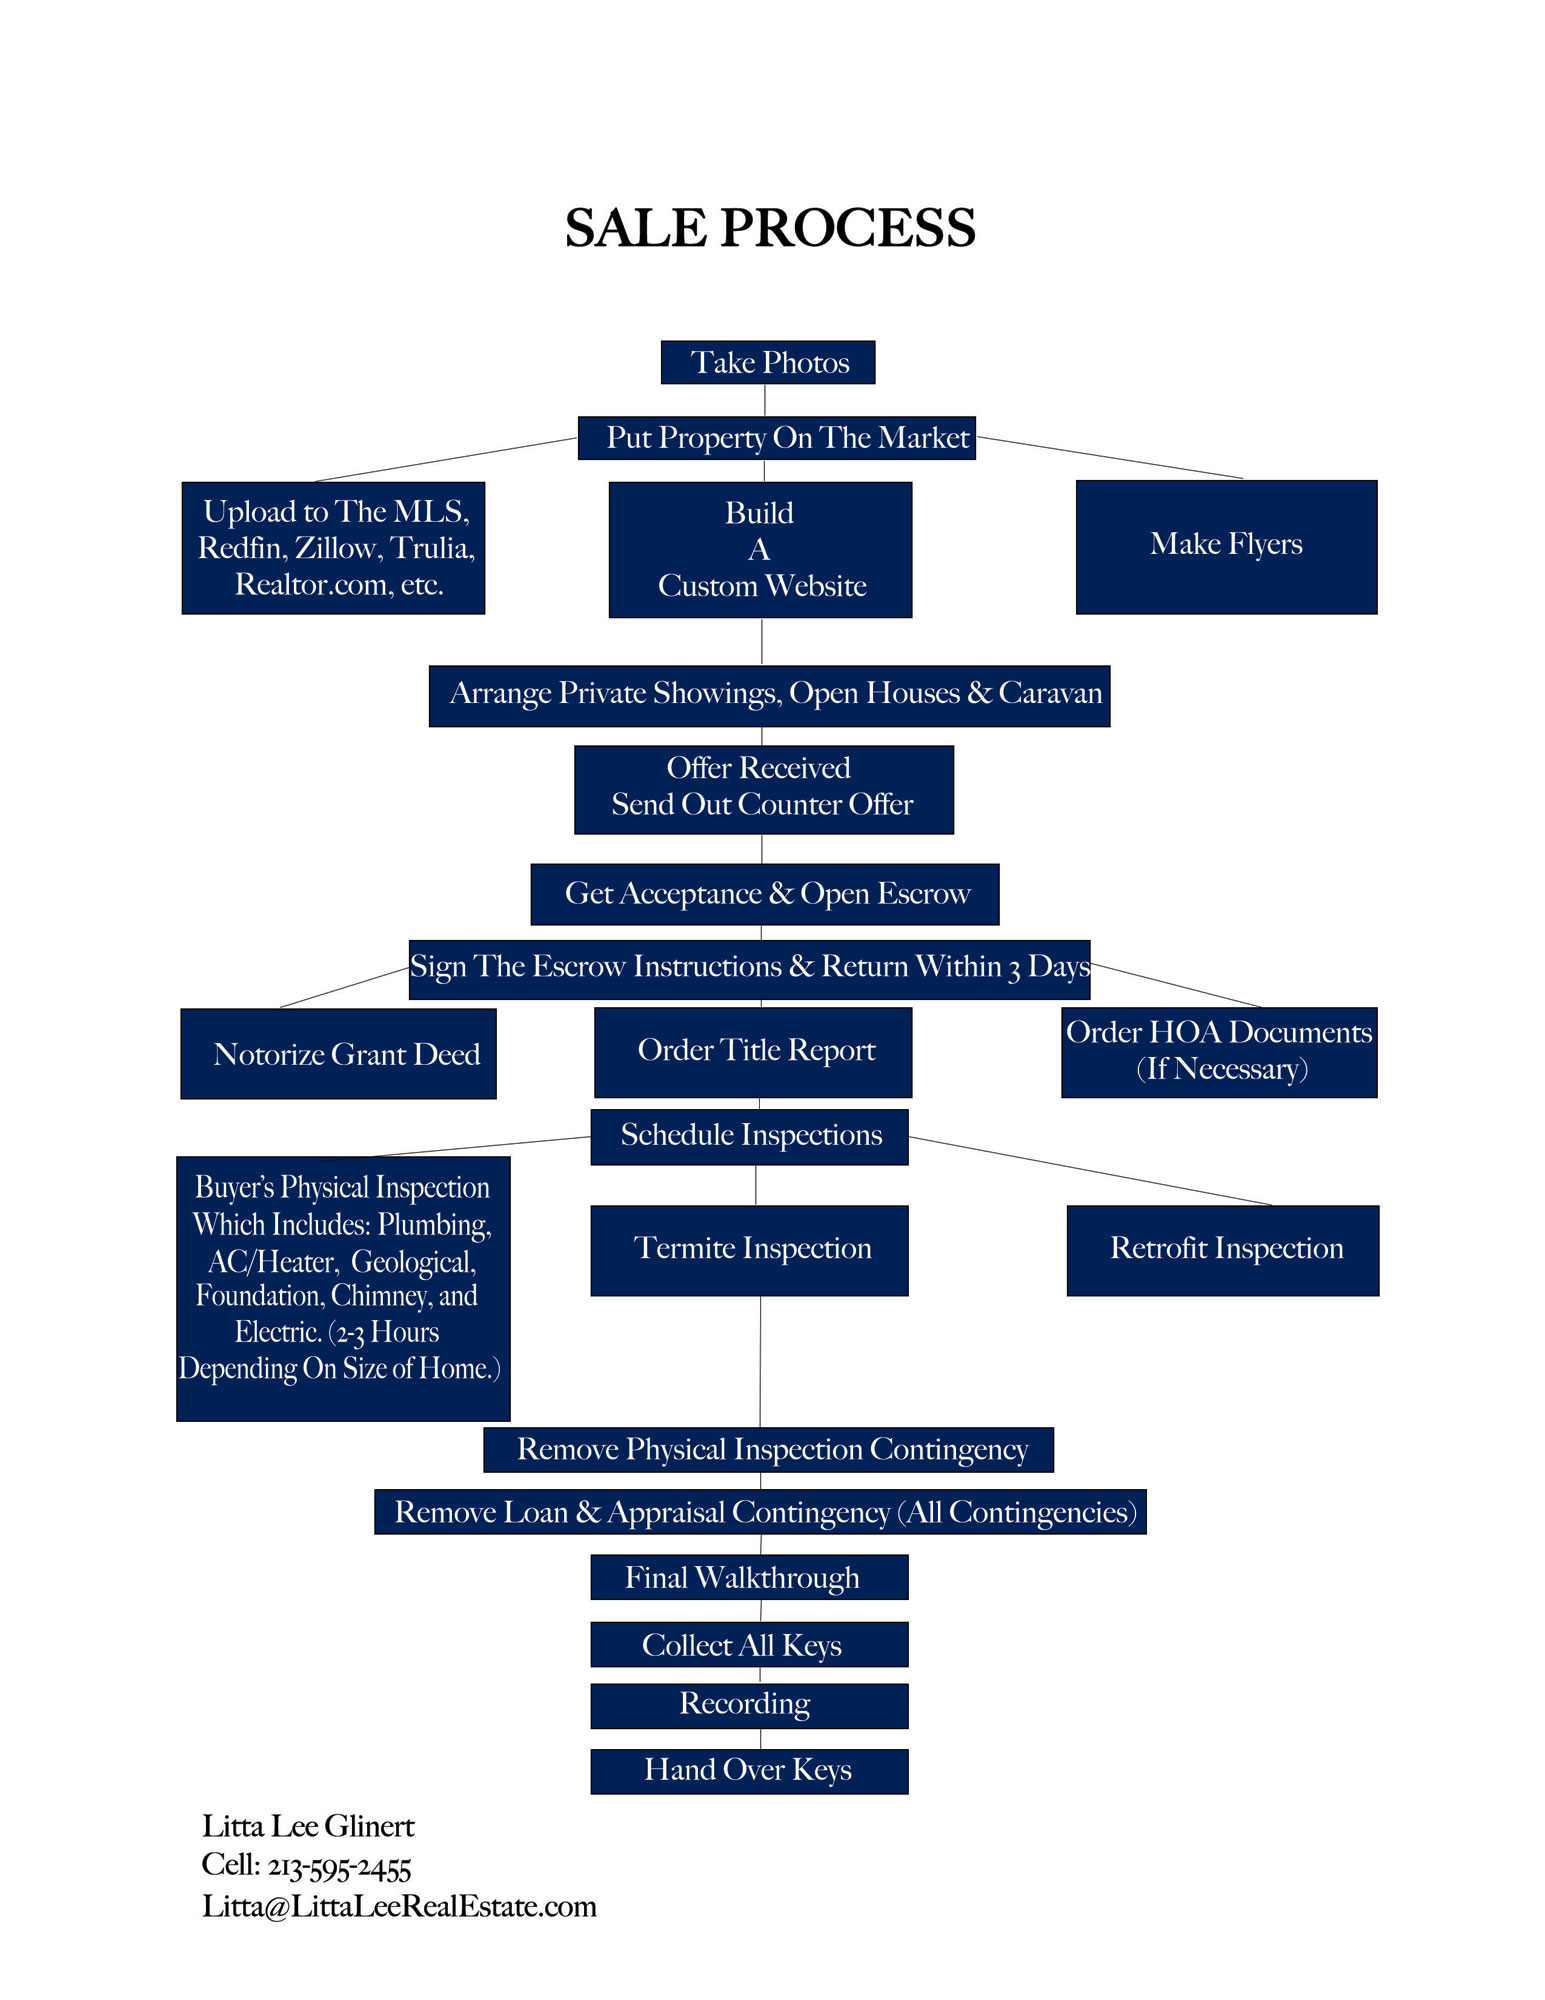 Sales-Process